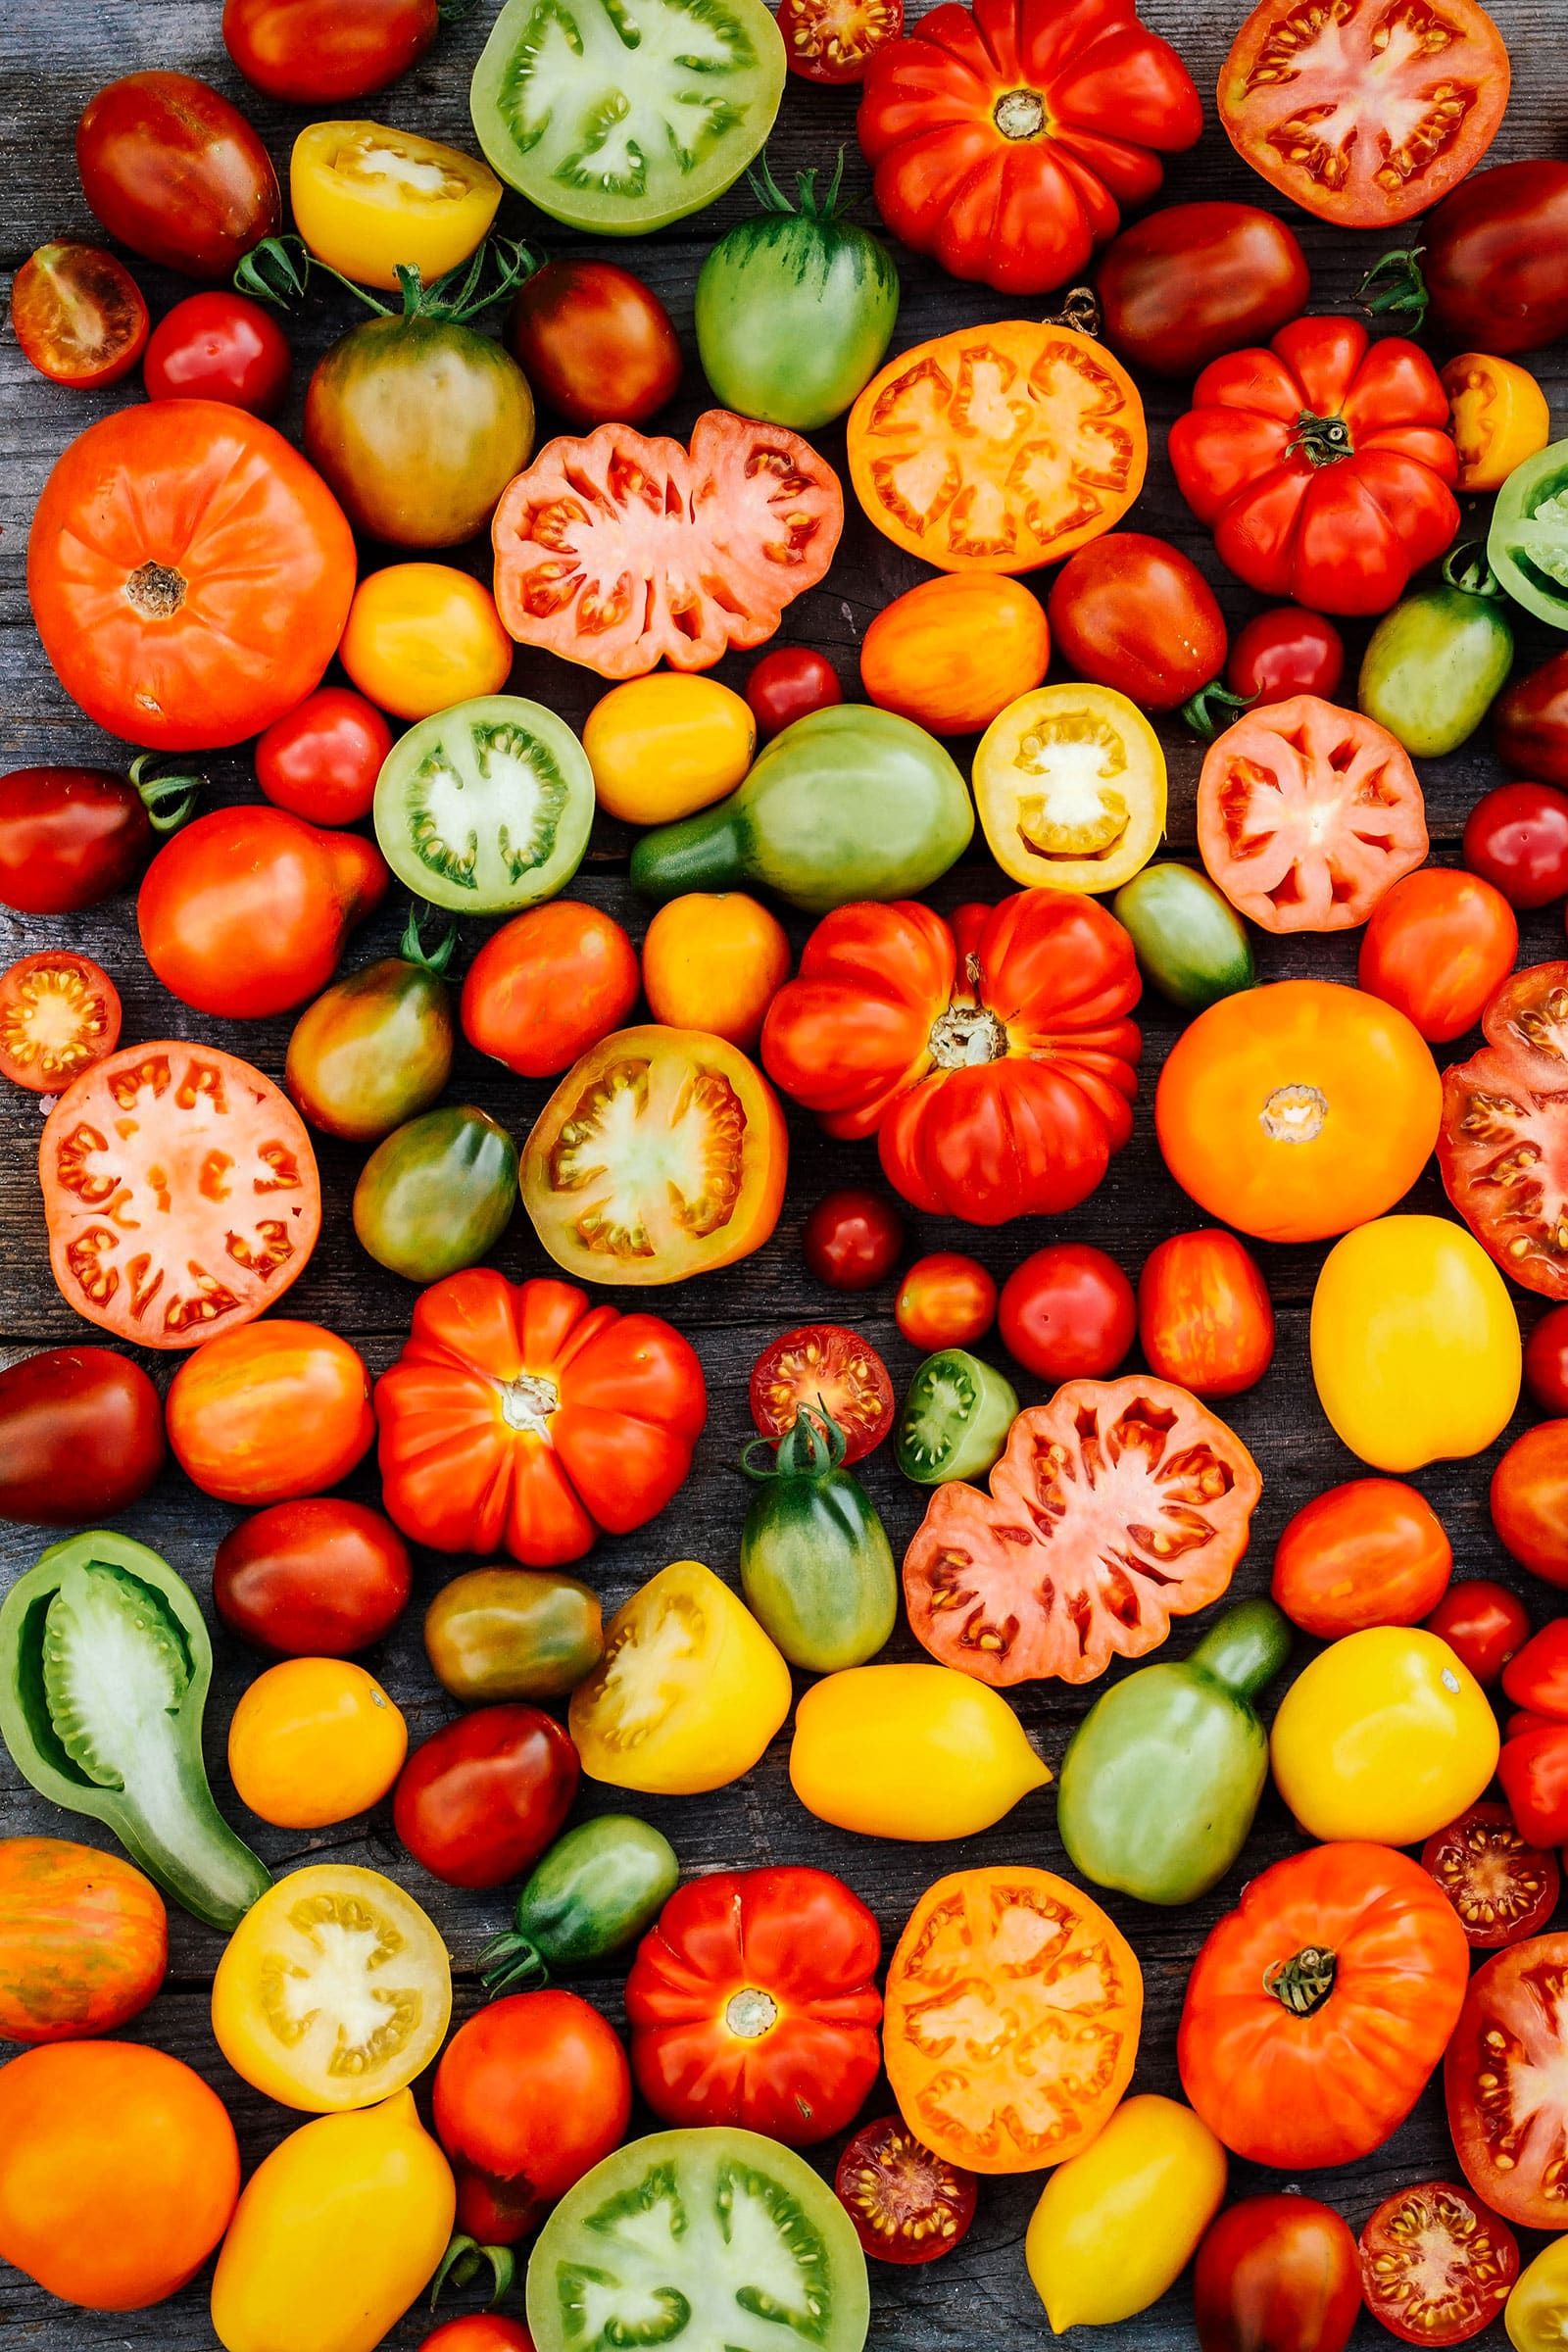 The best tasting heirloom tomato varieties (by color)